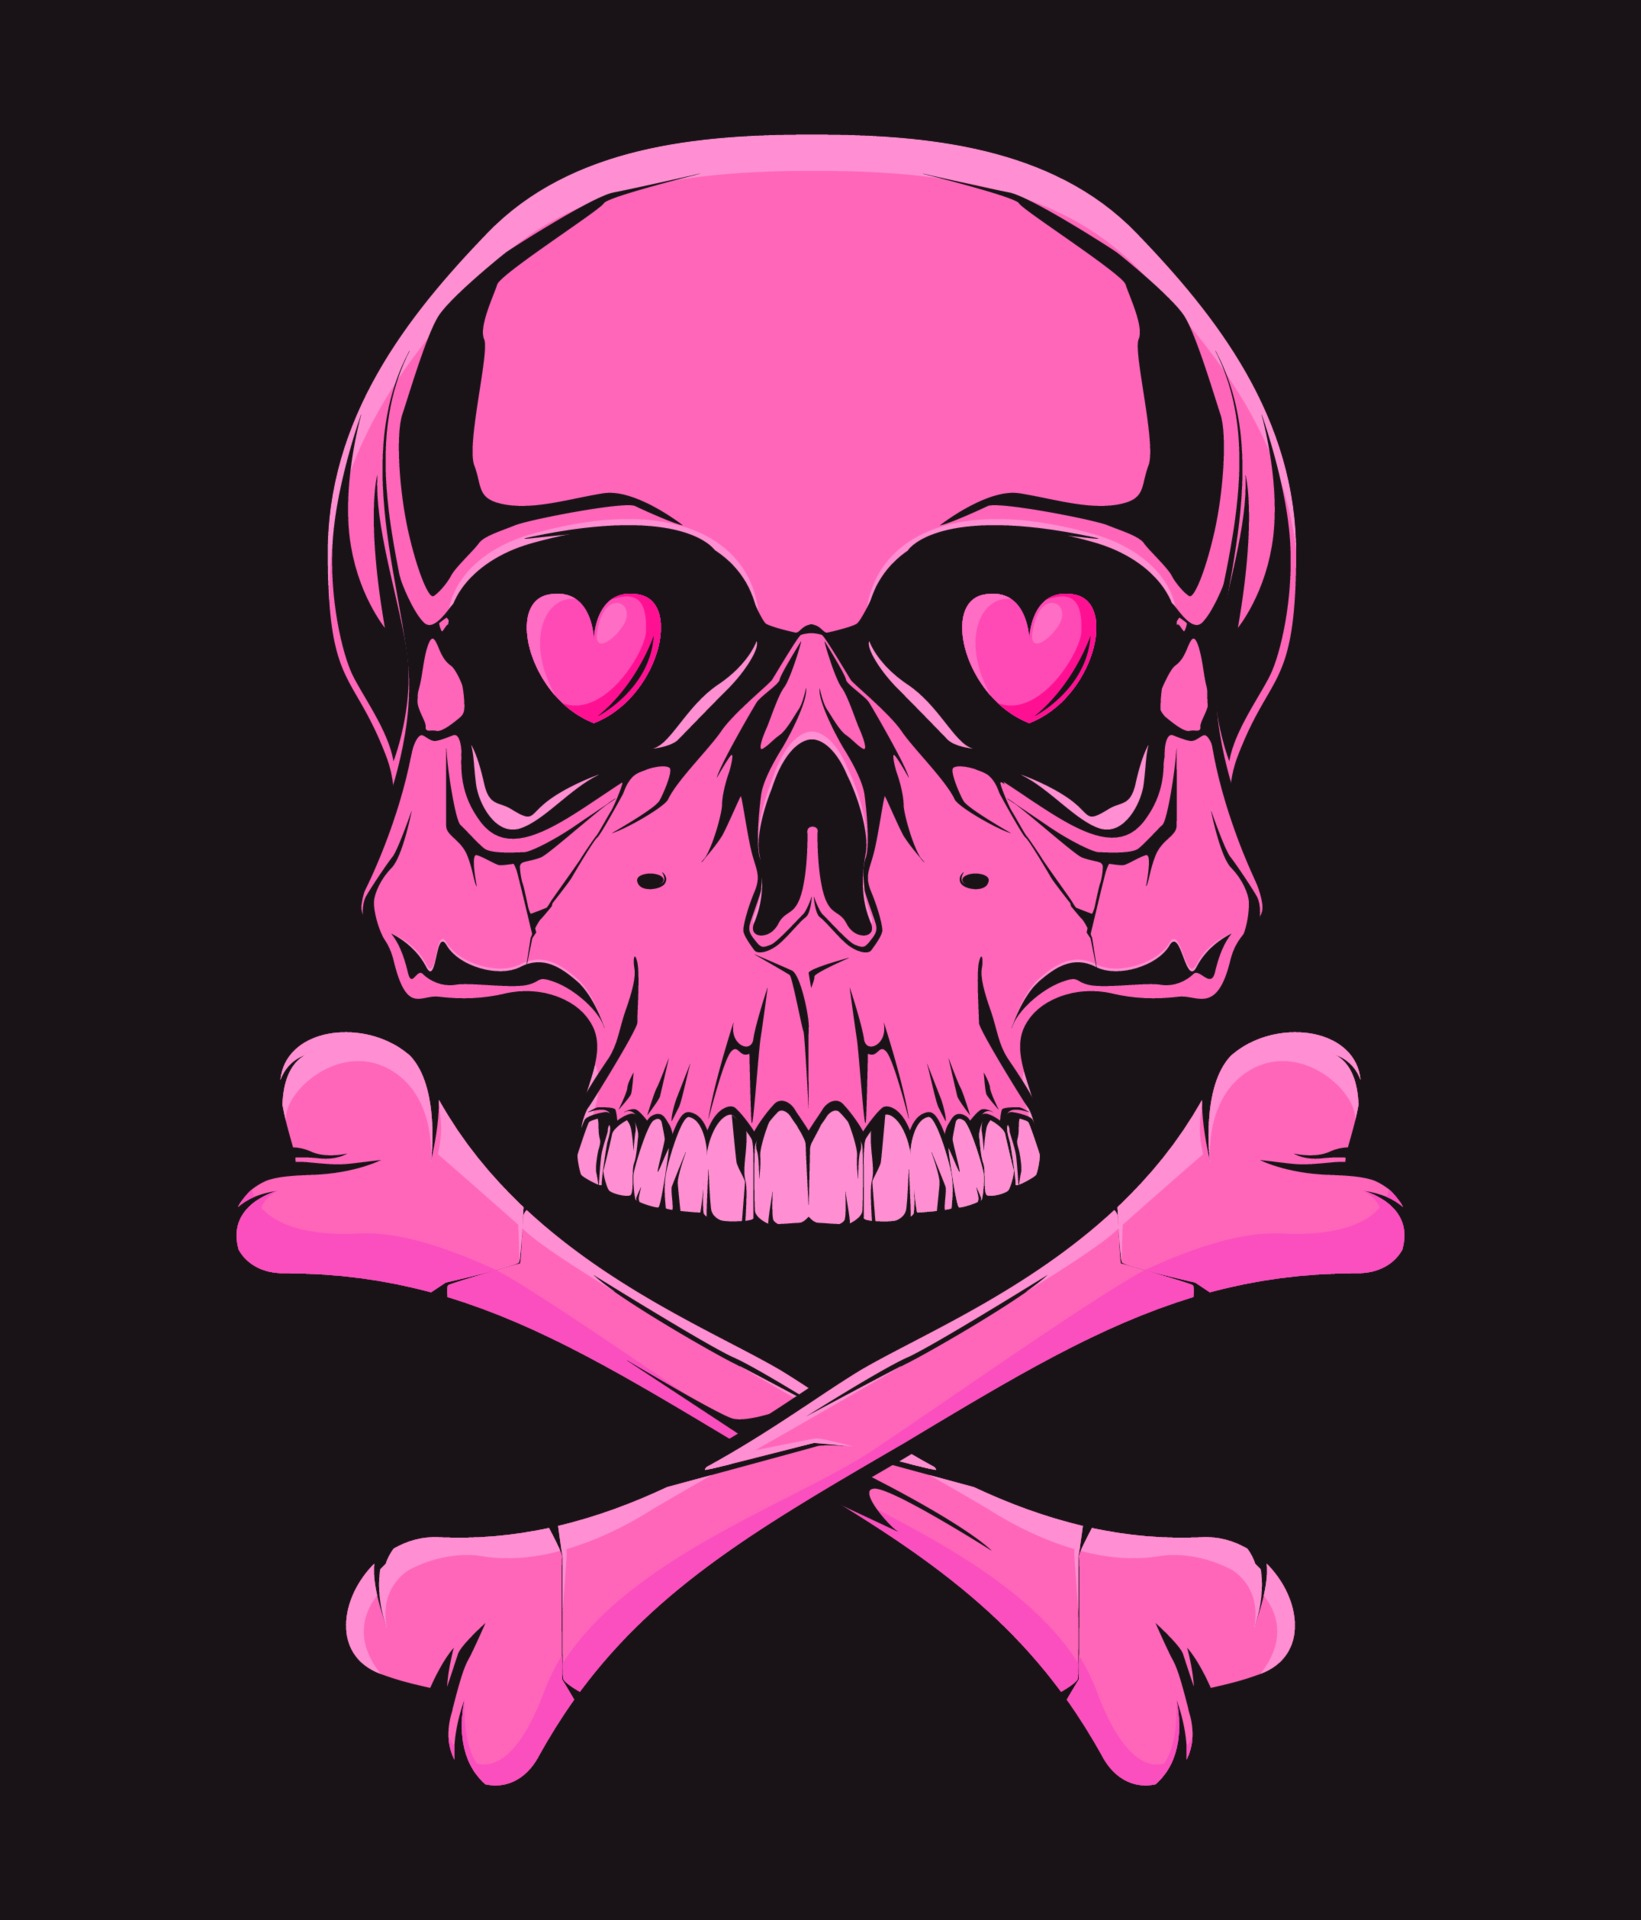 1641x1920 Pink skull with bones. Illustration for t-shirt print. Vector fashion illustration 2144847 Vector Art